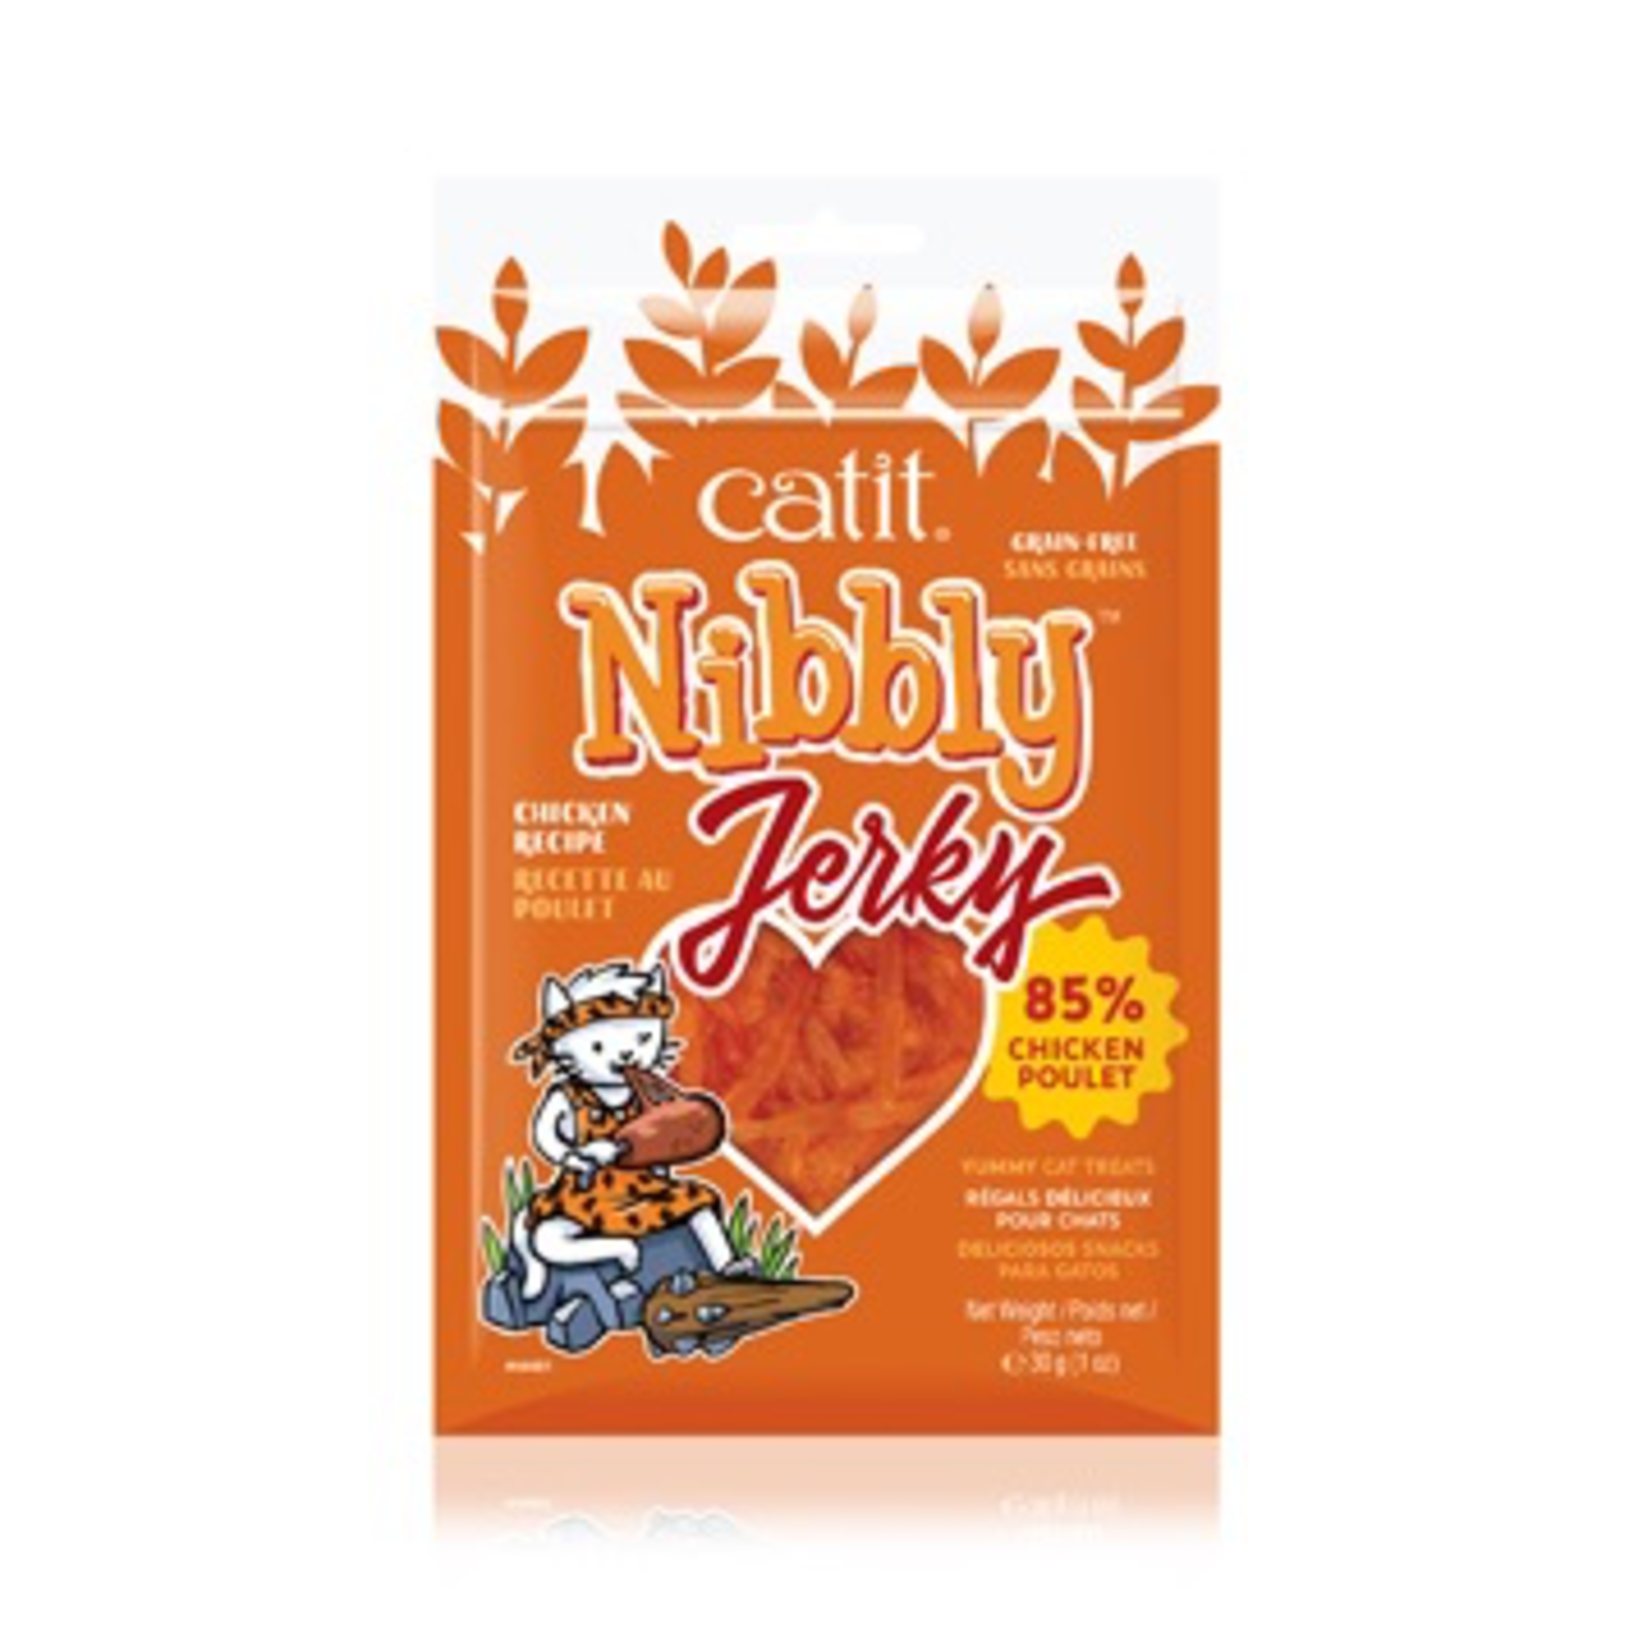 CAT IT Catit Nibbly Jerky Chicken Recipe - 30 g (1 oz)